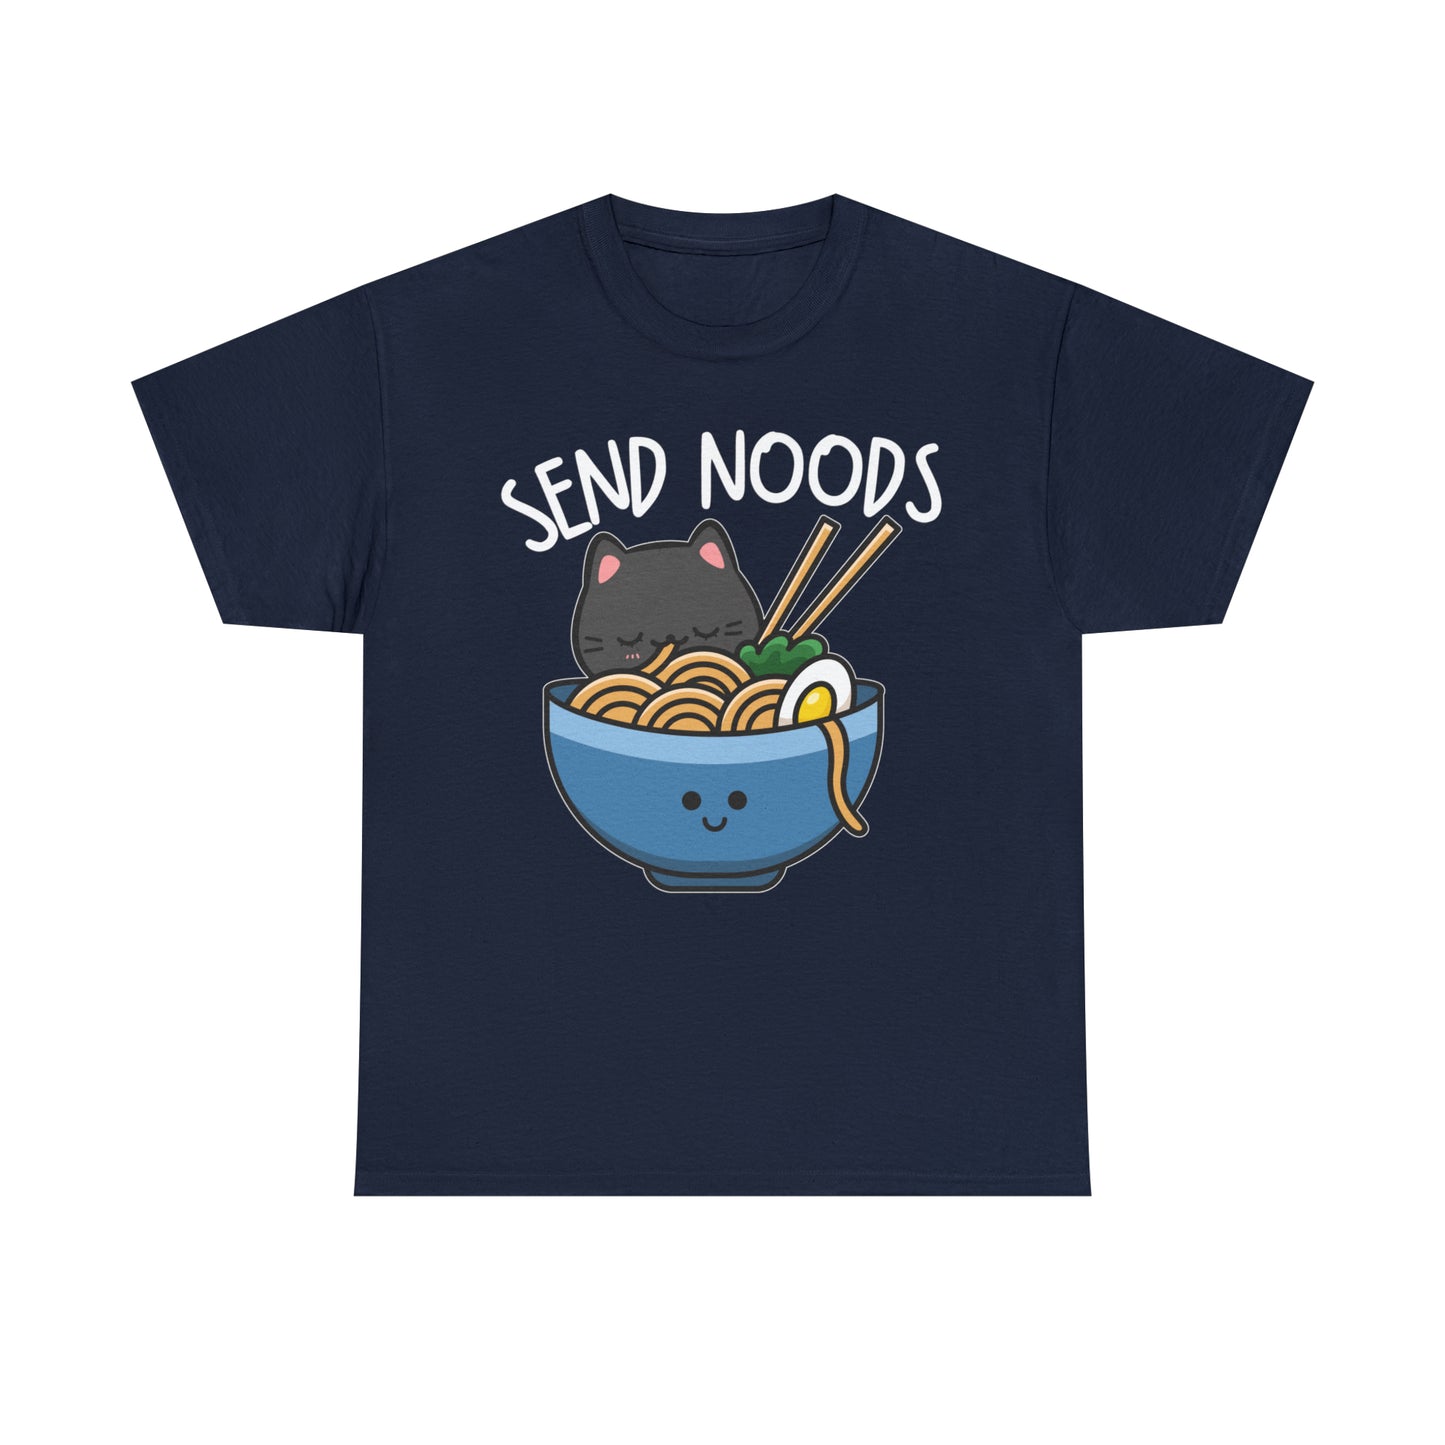 Send Noods! Fast!